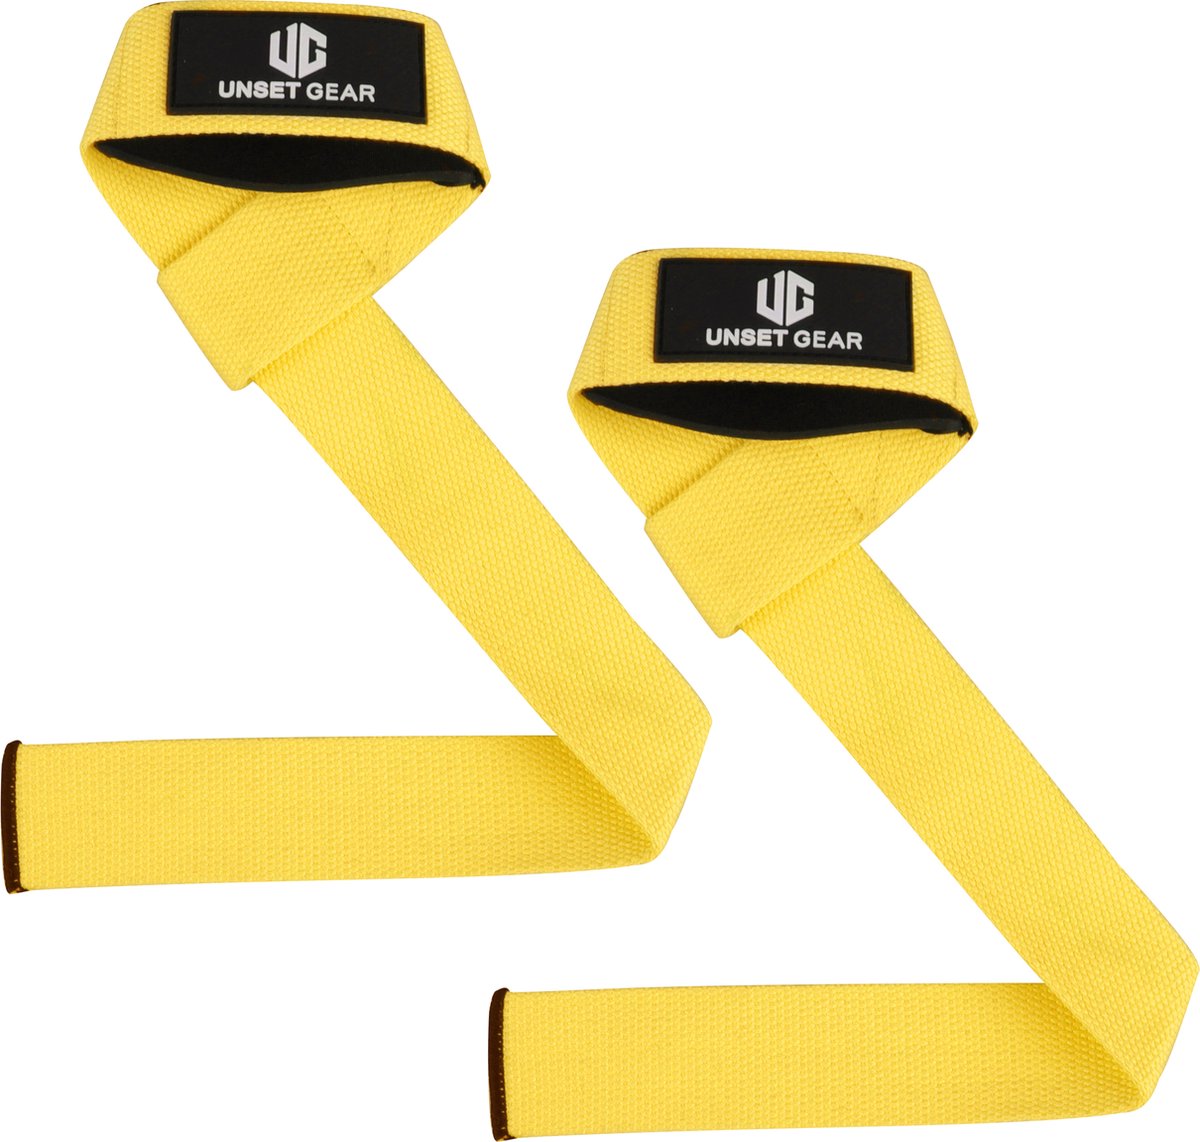 Unset Gear - Lifting straps - Geel- Fitness - Powerliften - Extra grip - Bodybuilding